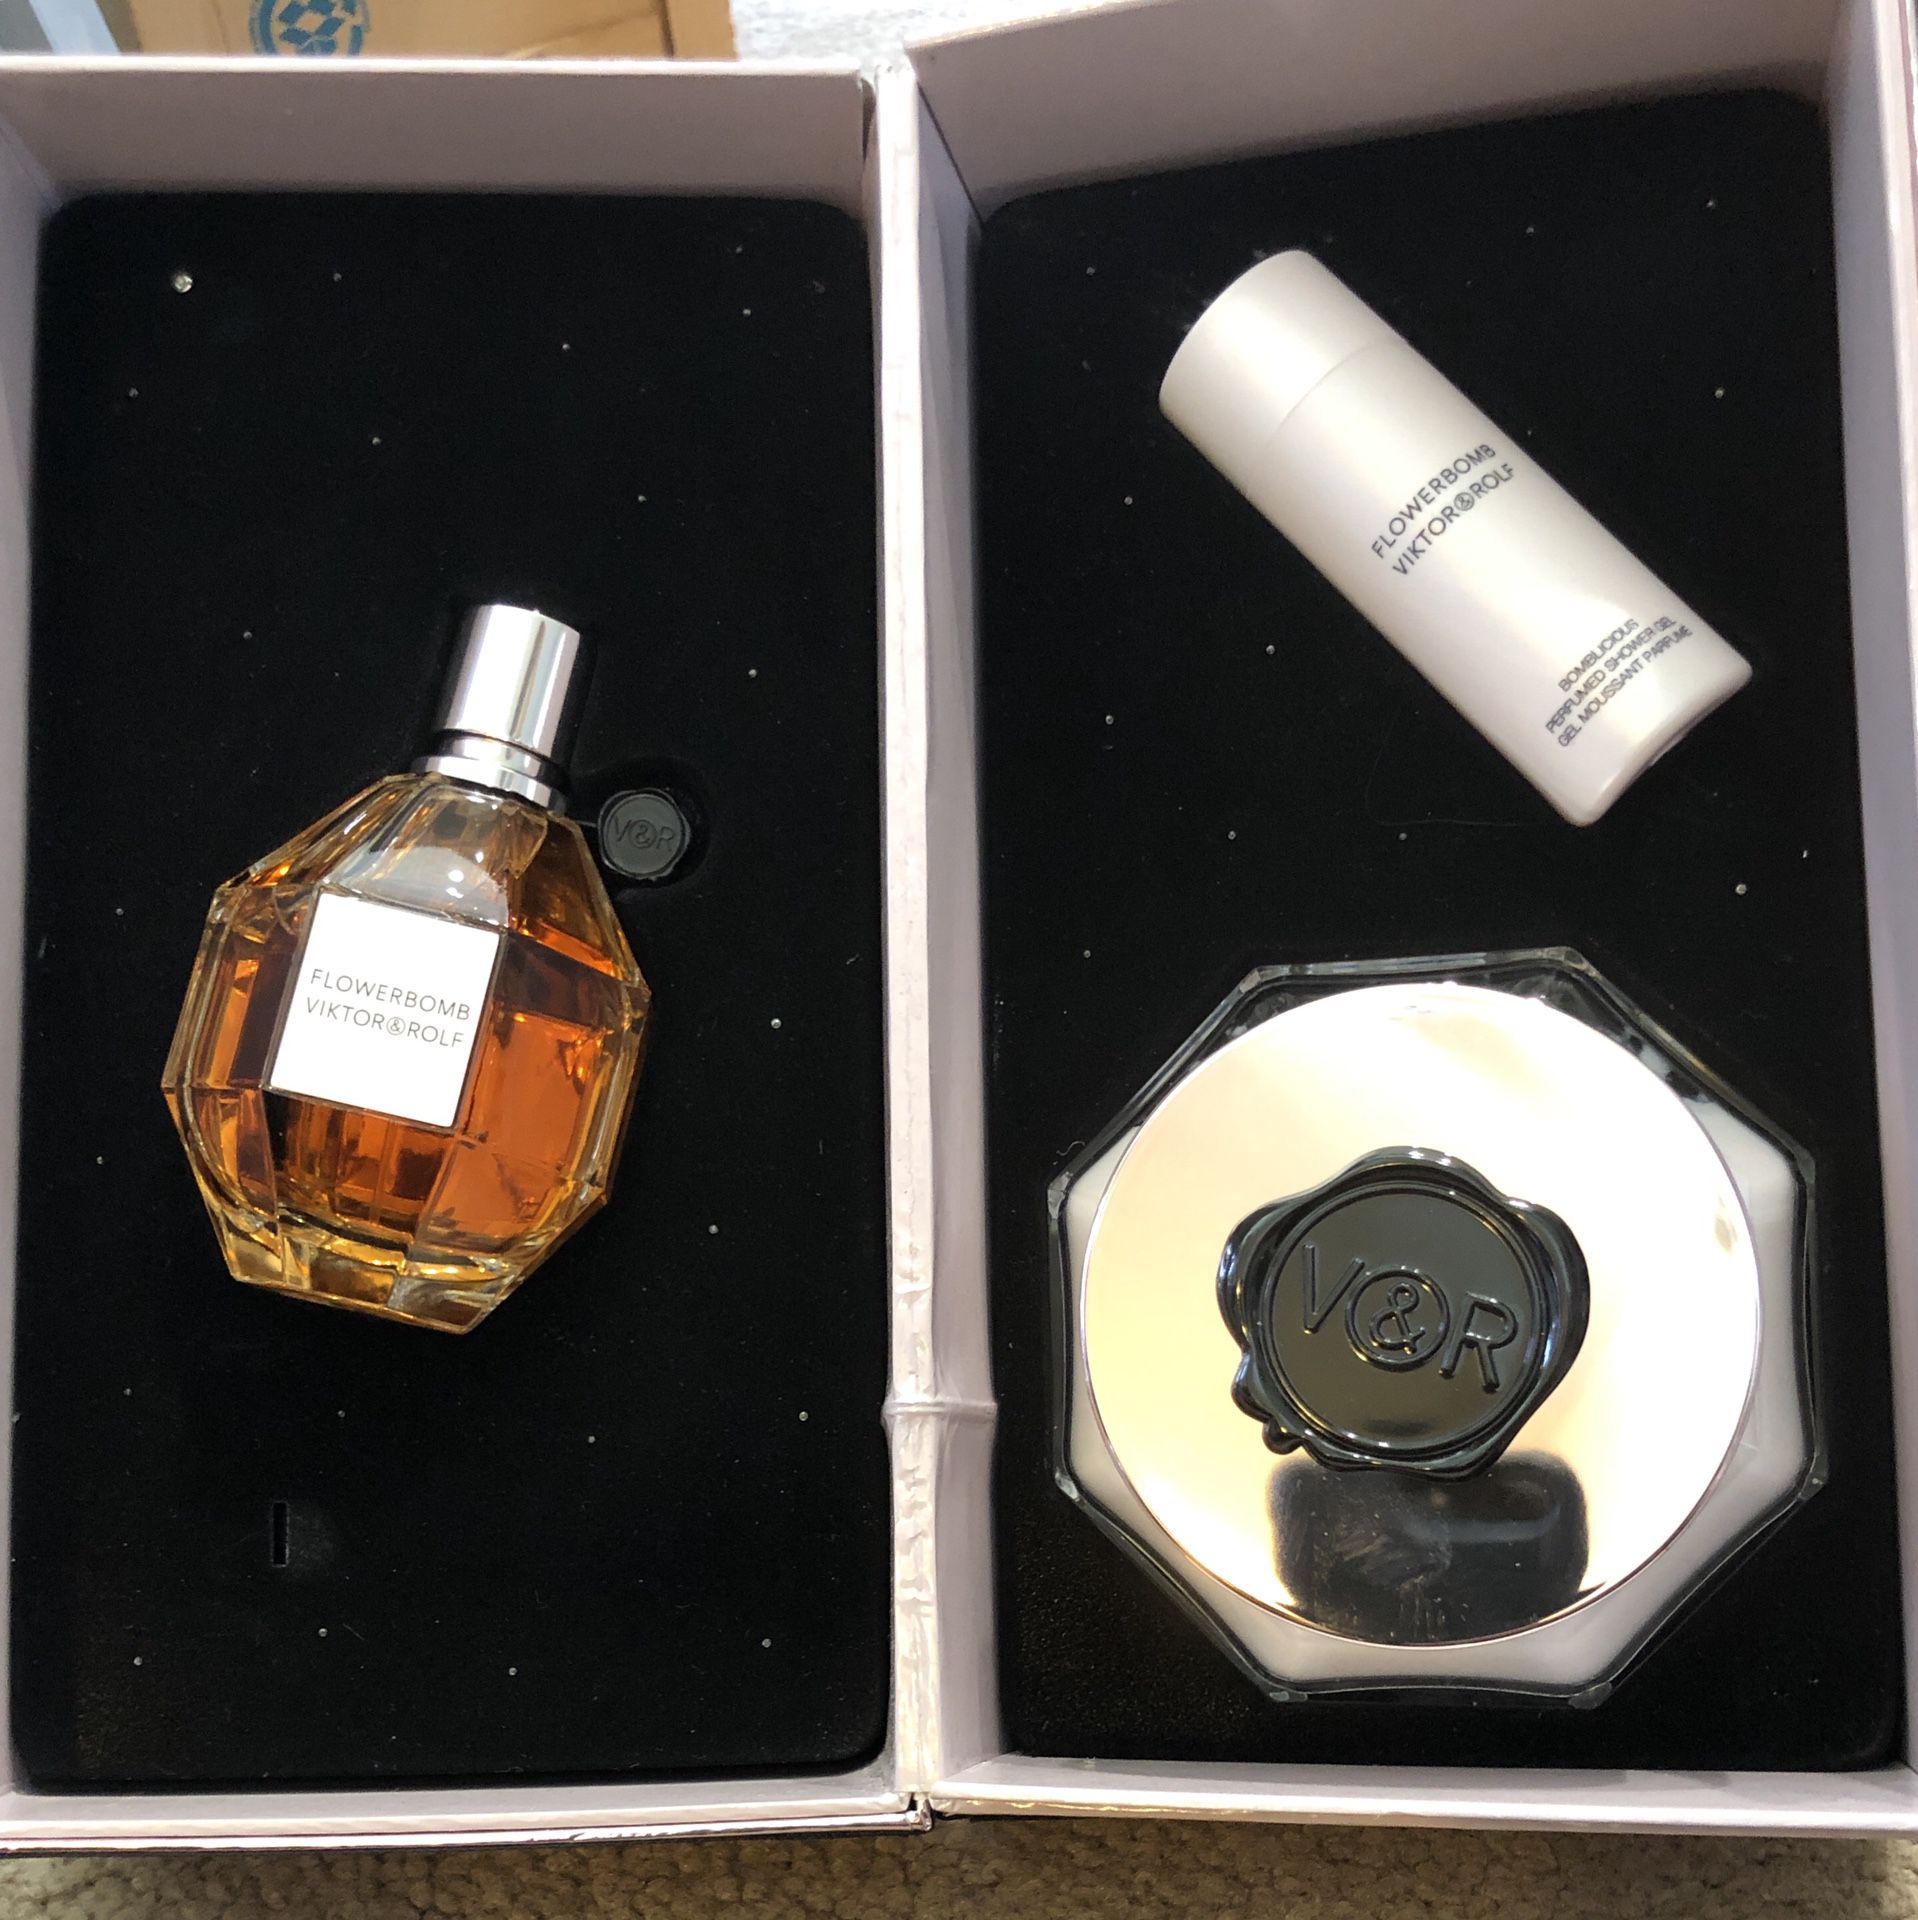 NIB Flowerbomb gift set by Viktor & Rolf 3.4 oz perfume, 6.7 oz body cream, 1.7 oz shower gel. Great Mother’s Day gift!